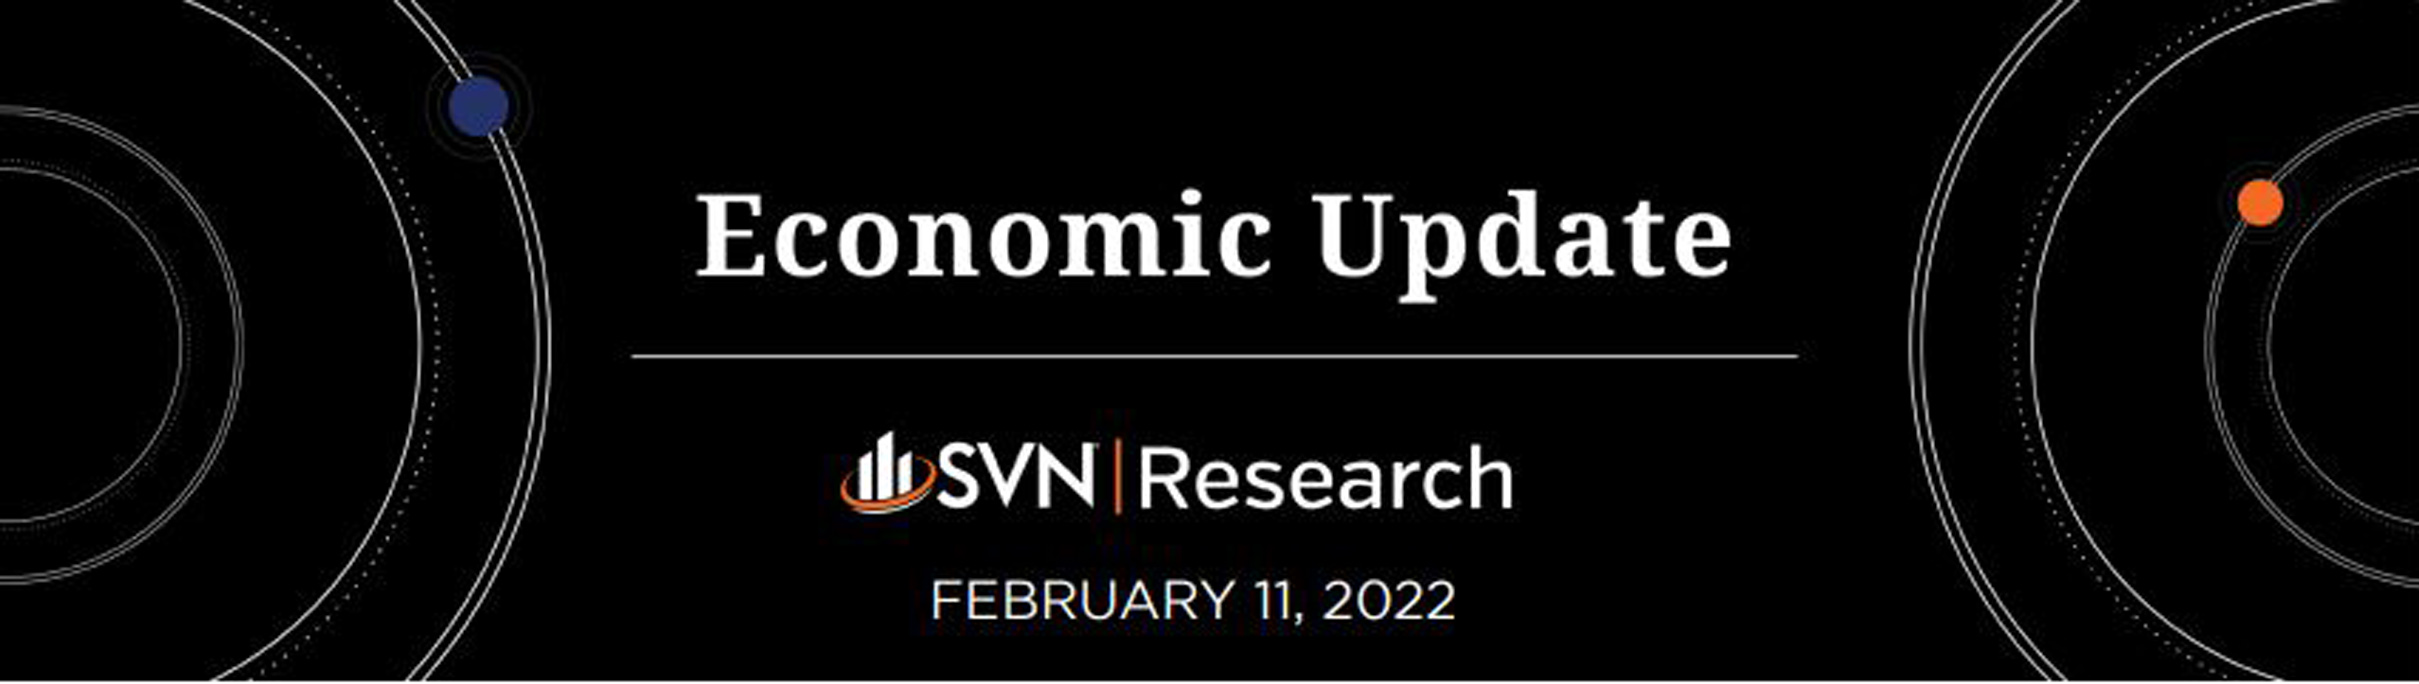 SVN | Research Economic Update 02.11.2022